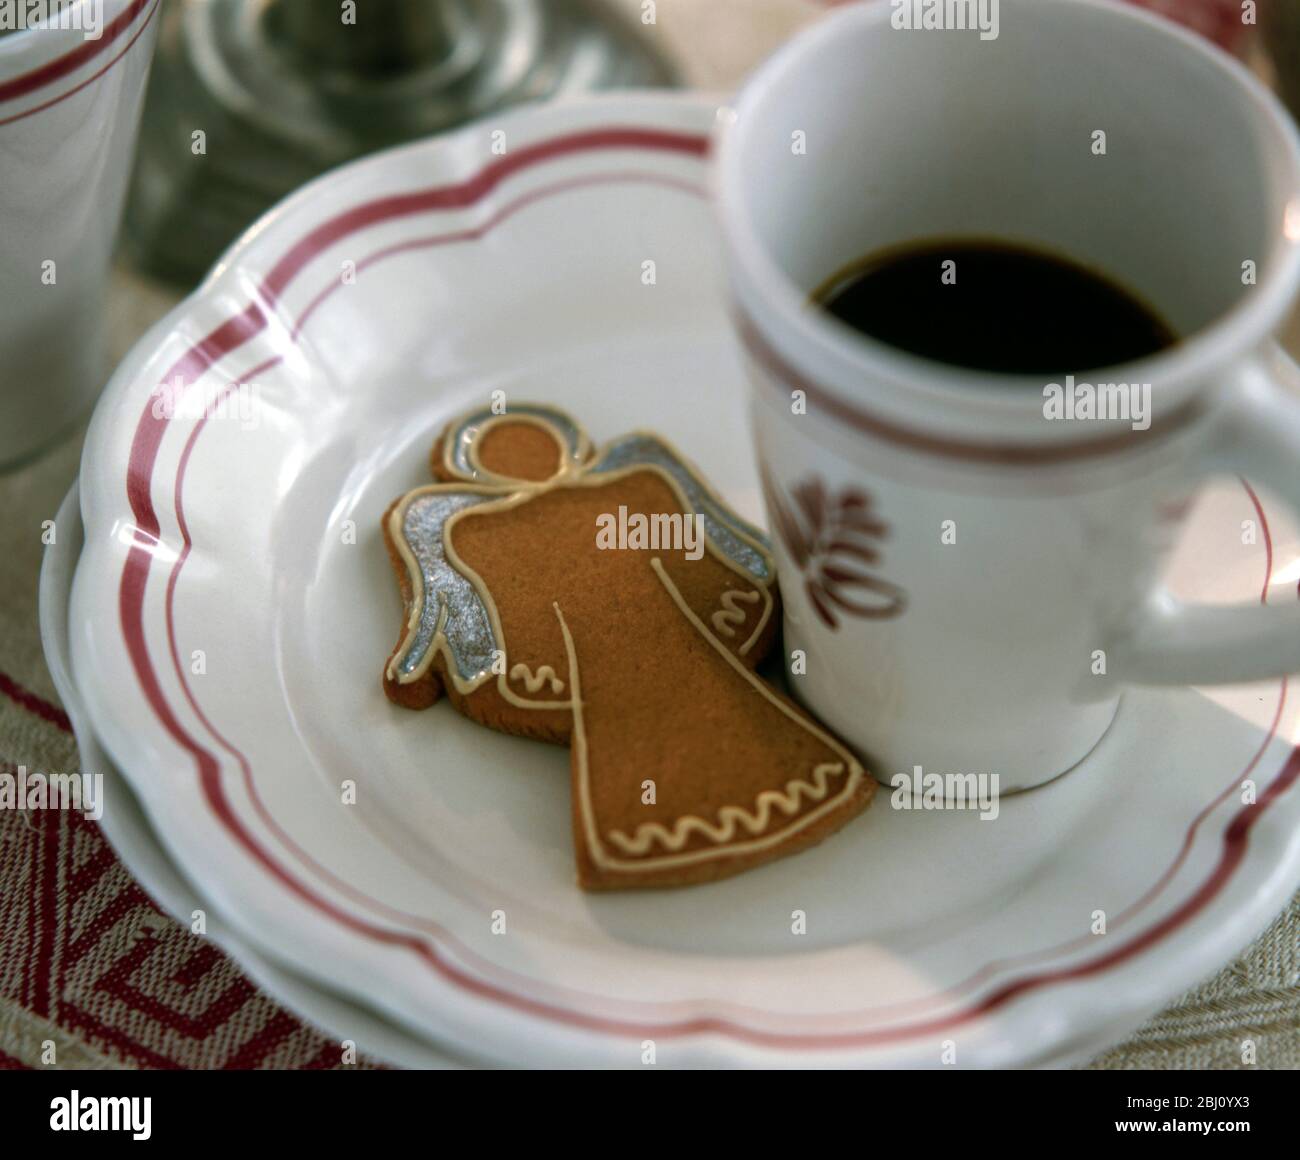 Engel geformter Ingwer Keks mit Tasse Kaffee - Stockfoto